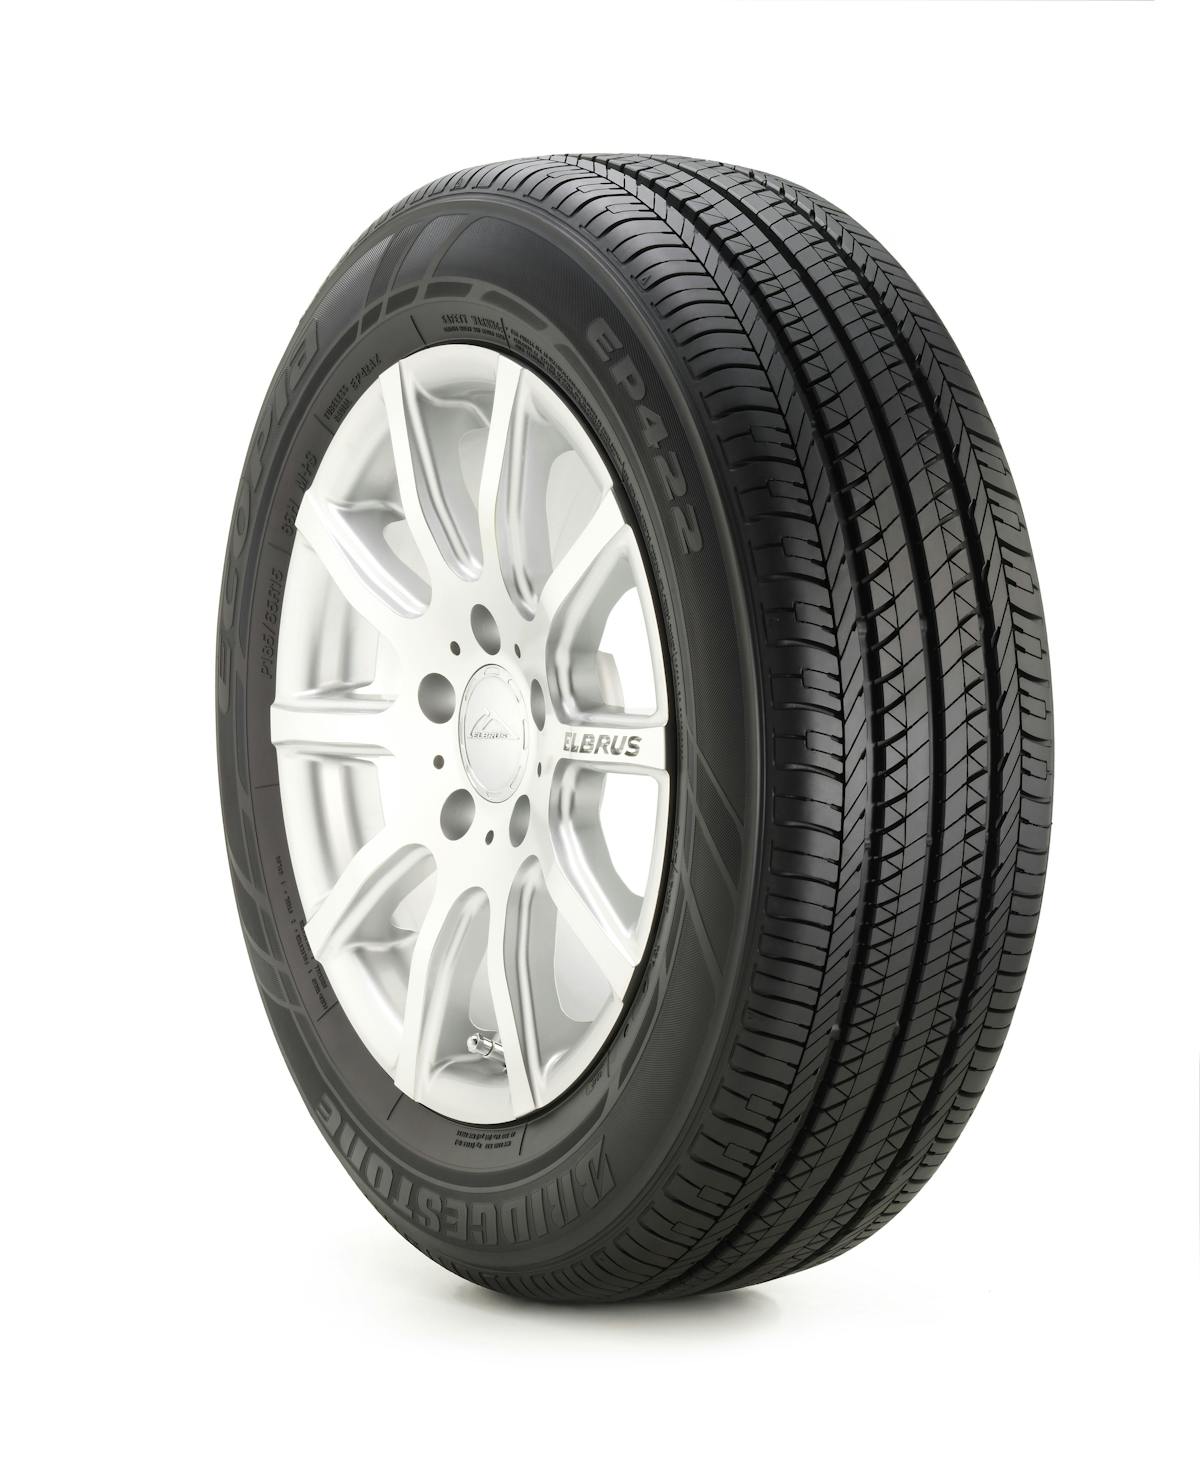 more-radial-bridgestone-tires-for-china